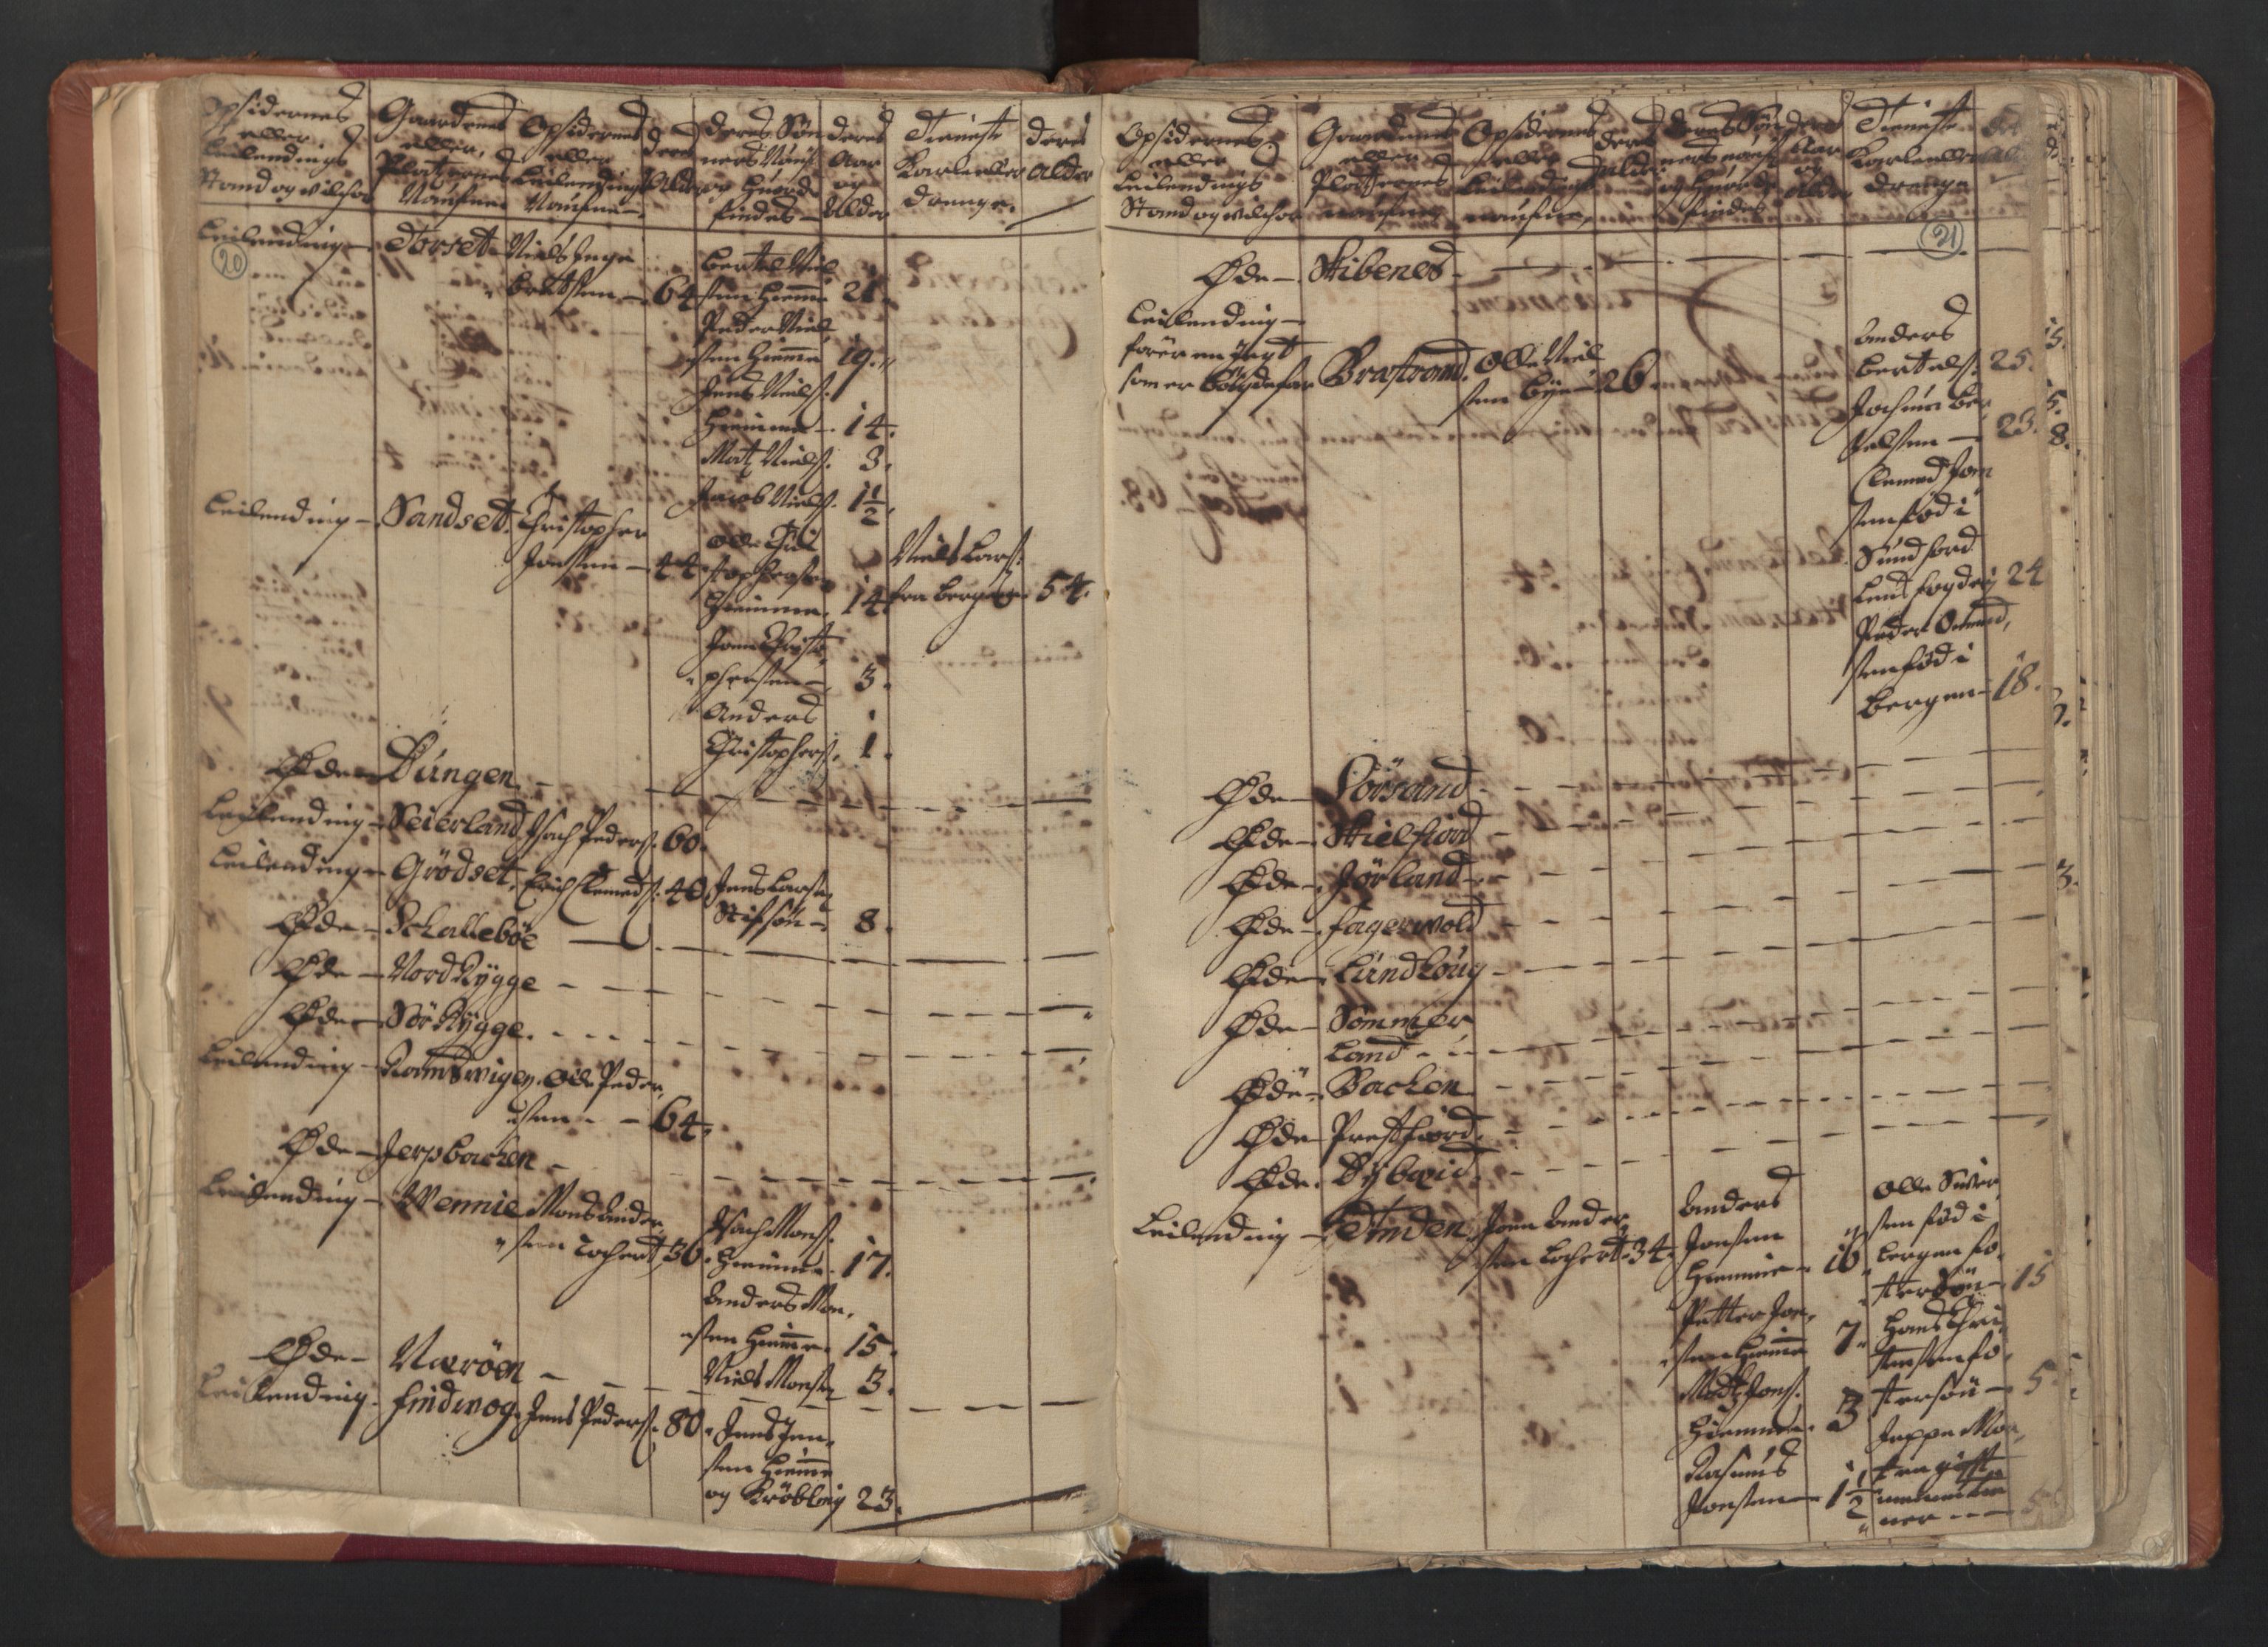 RA, Manntallet 1701, nr. 18: Vesterålen, Andenes og Lofoten fogderi, 1701, s. 20-21